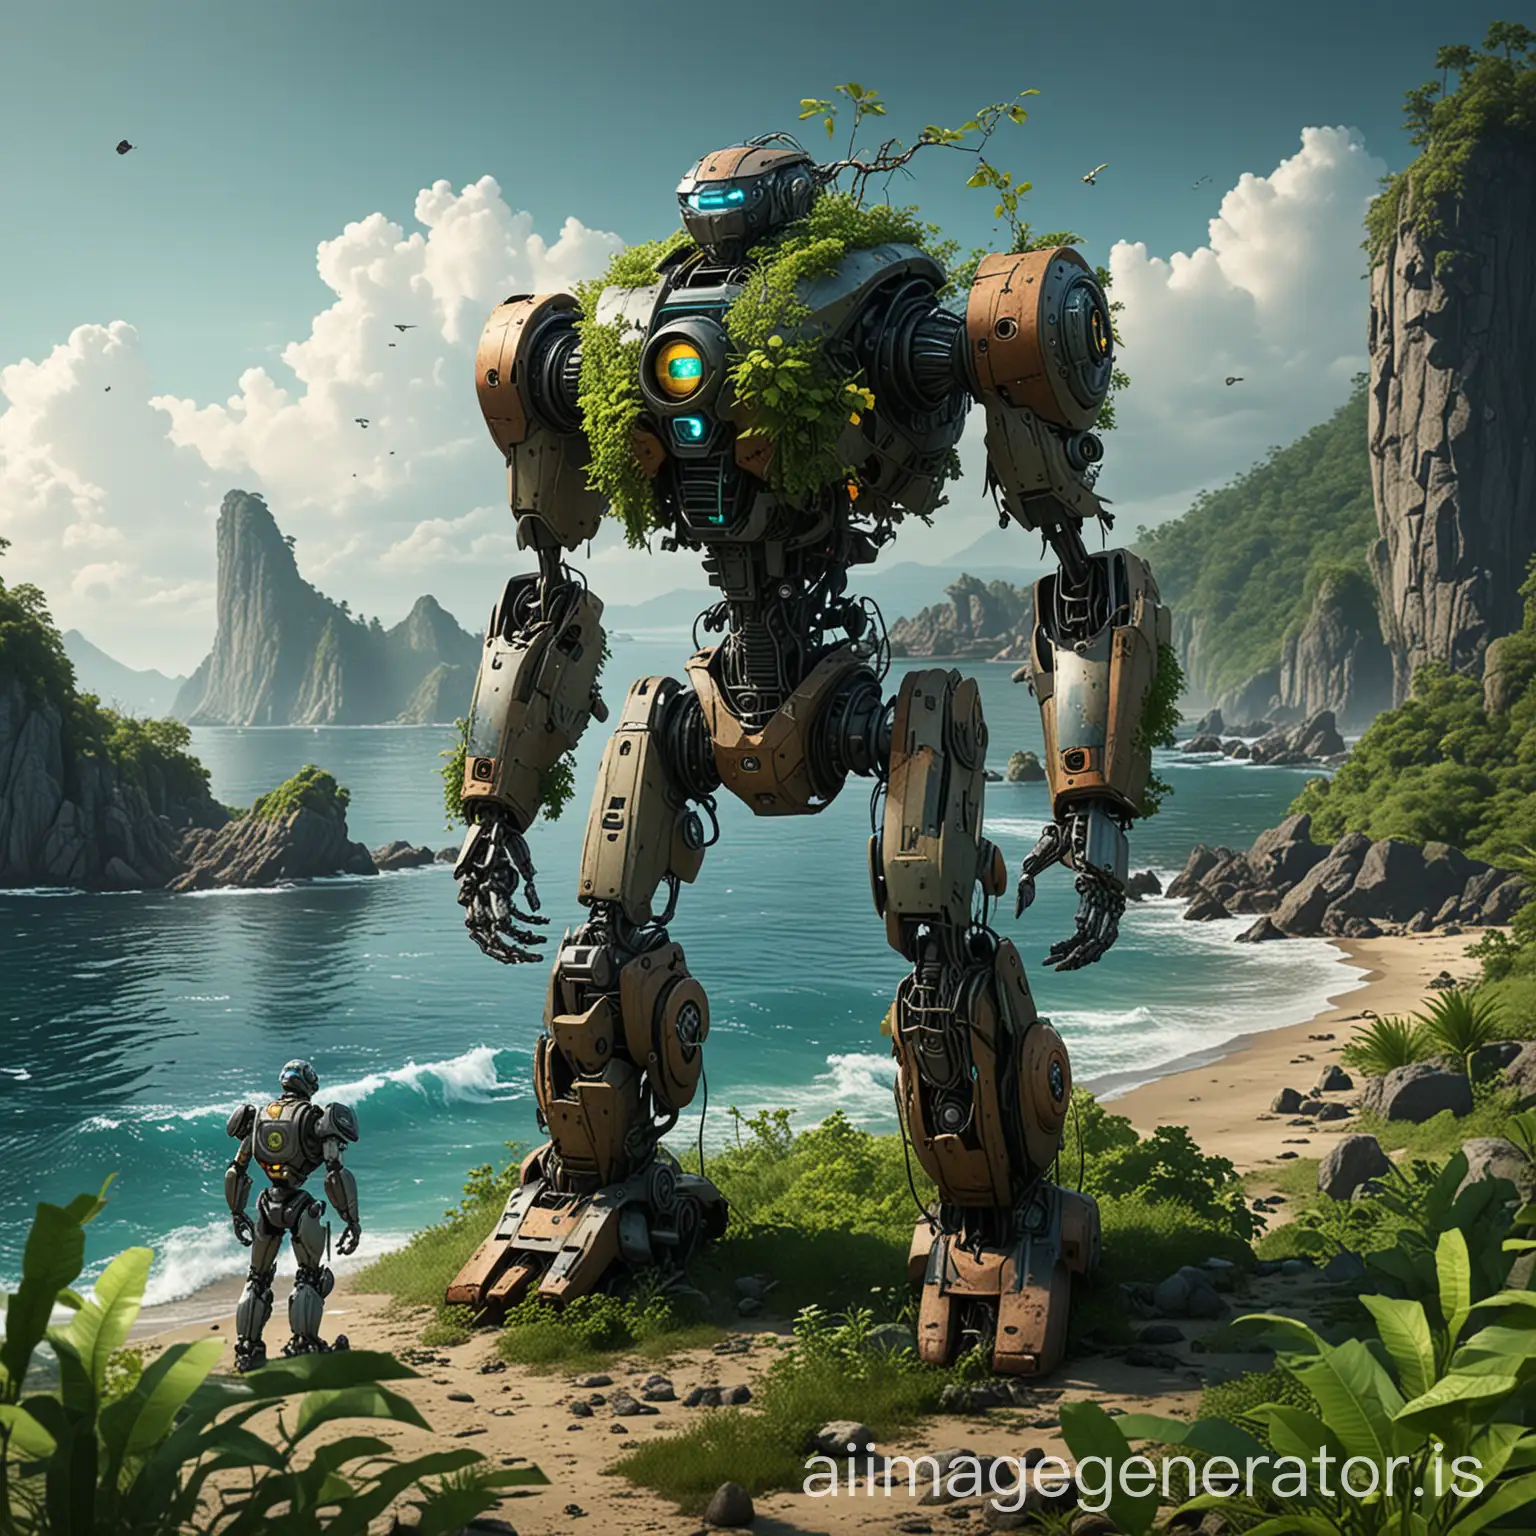  Nature robots island


